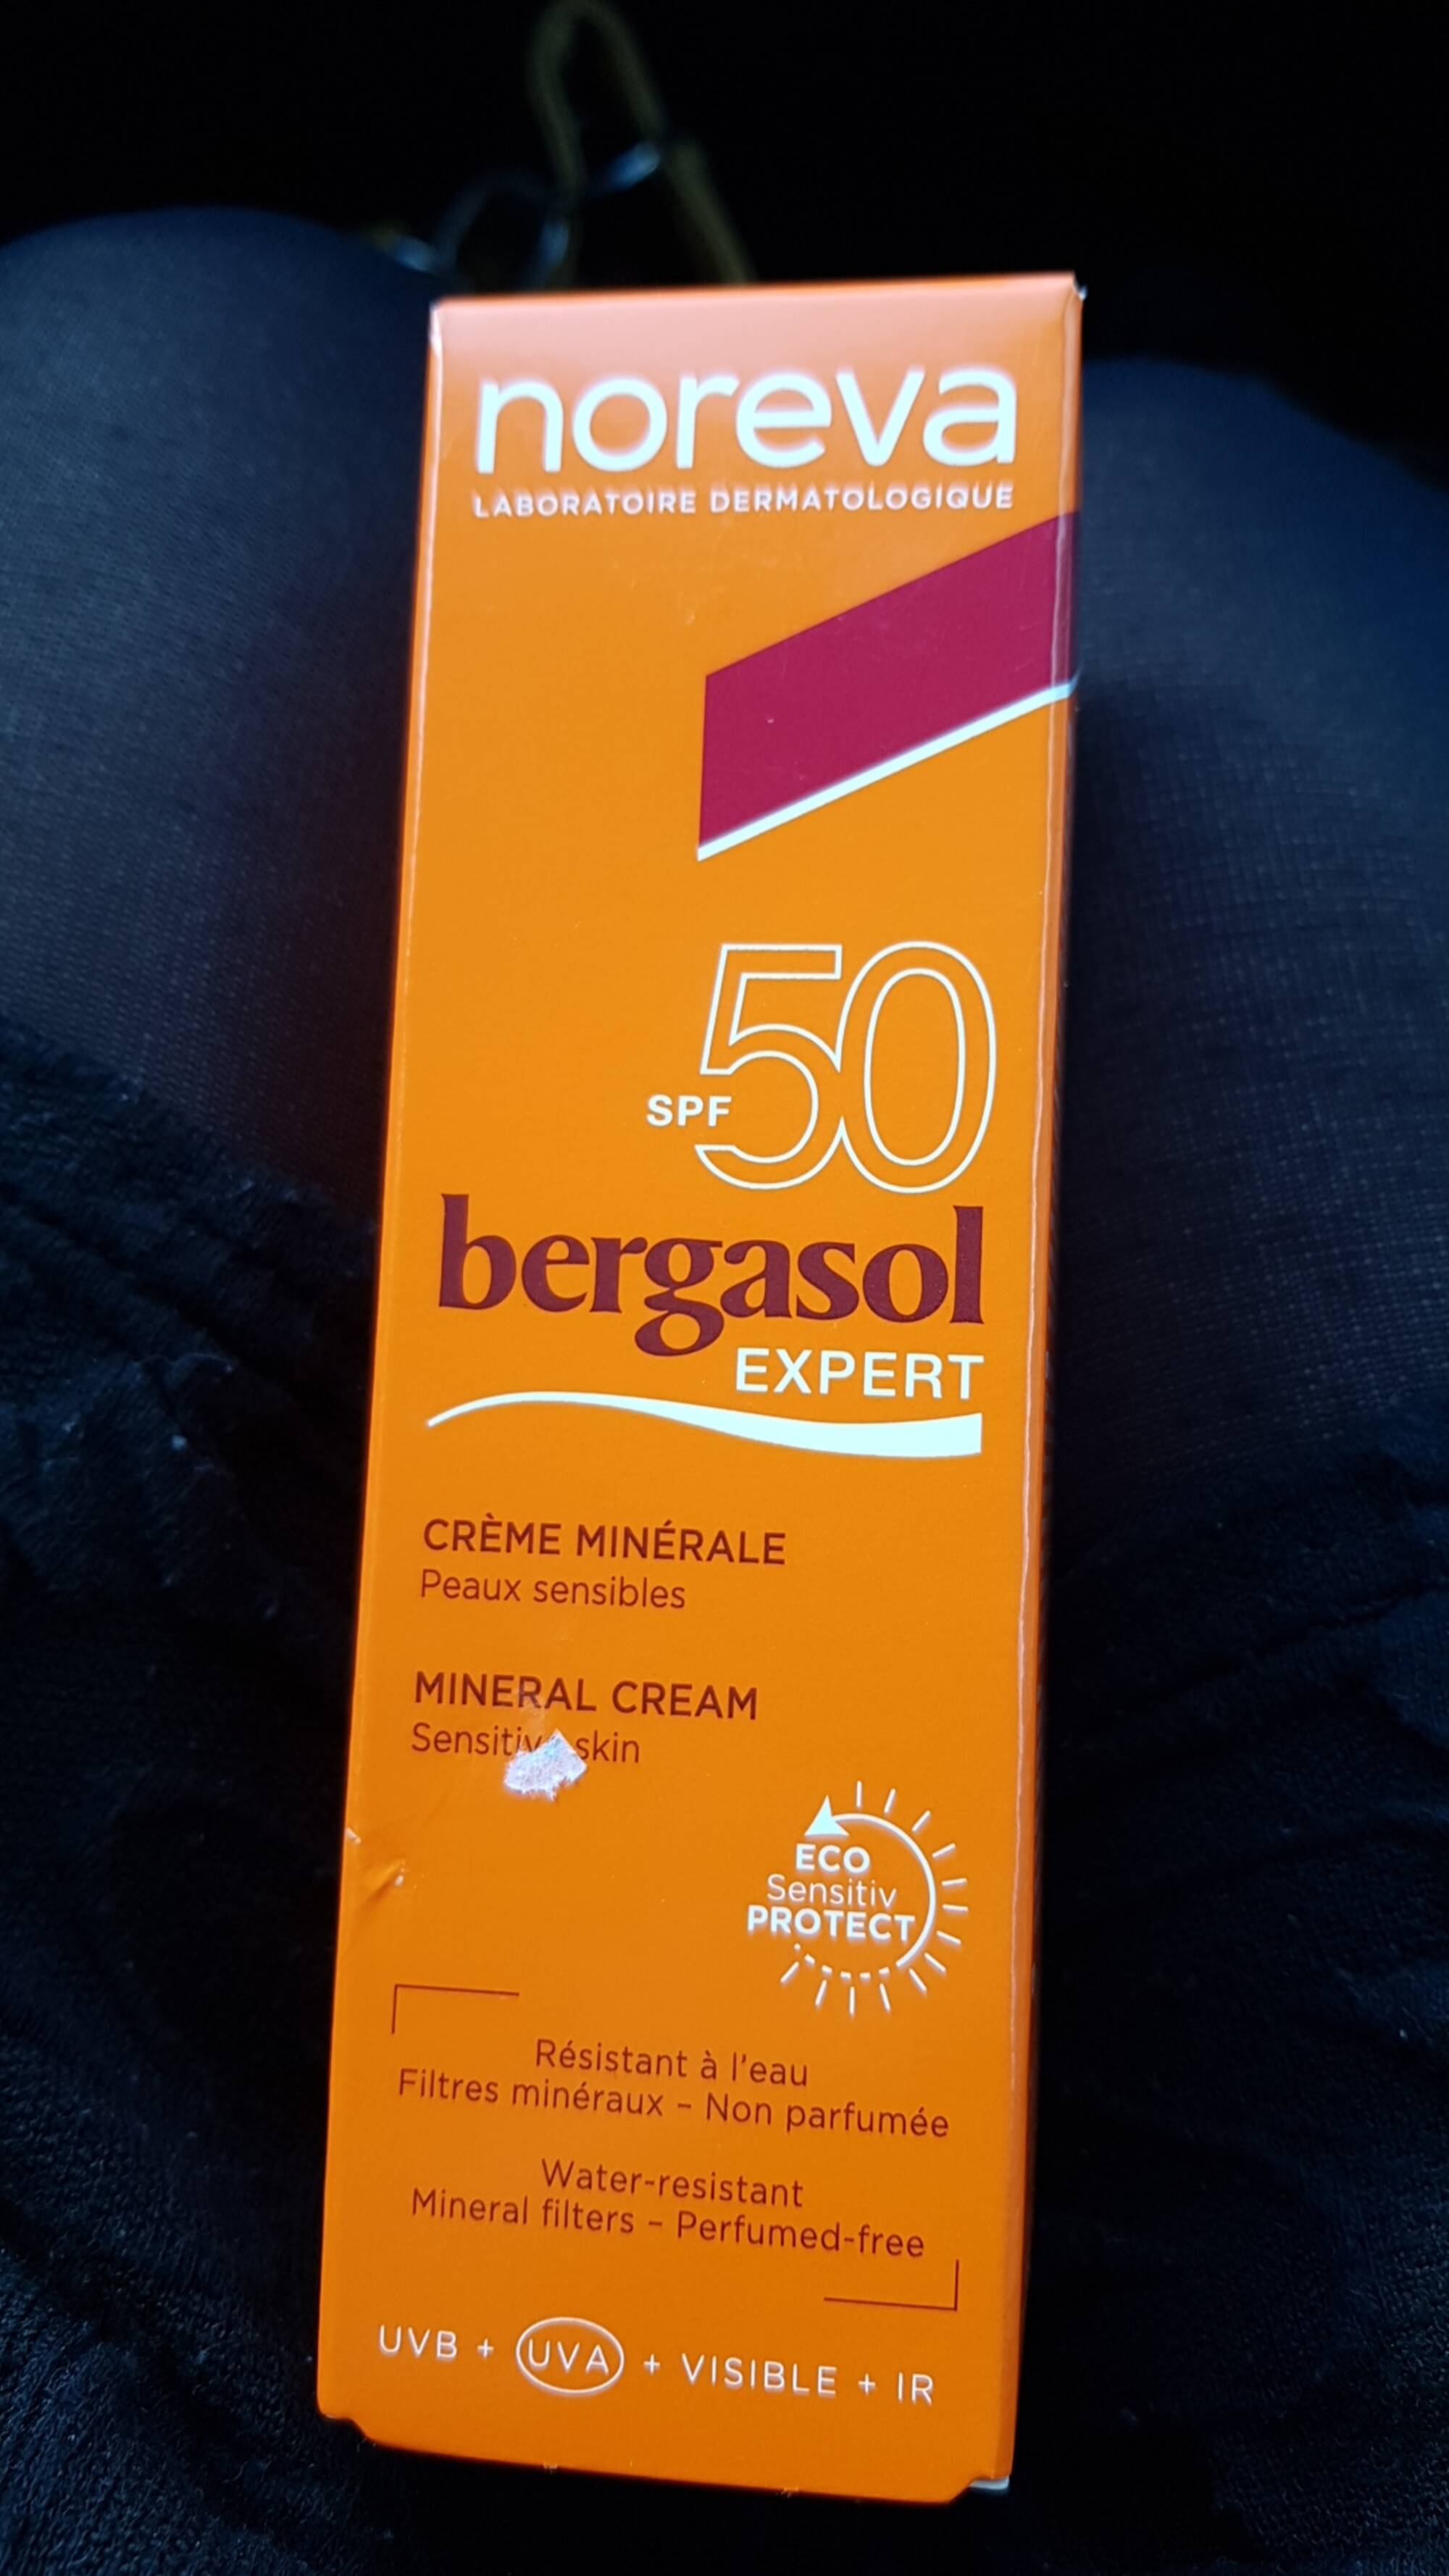 NOREVA - Bergasol expert - Crème minérale SPF 50 